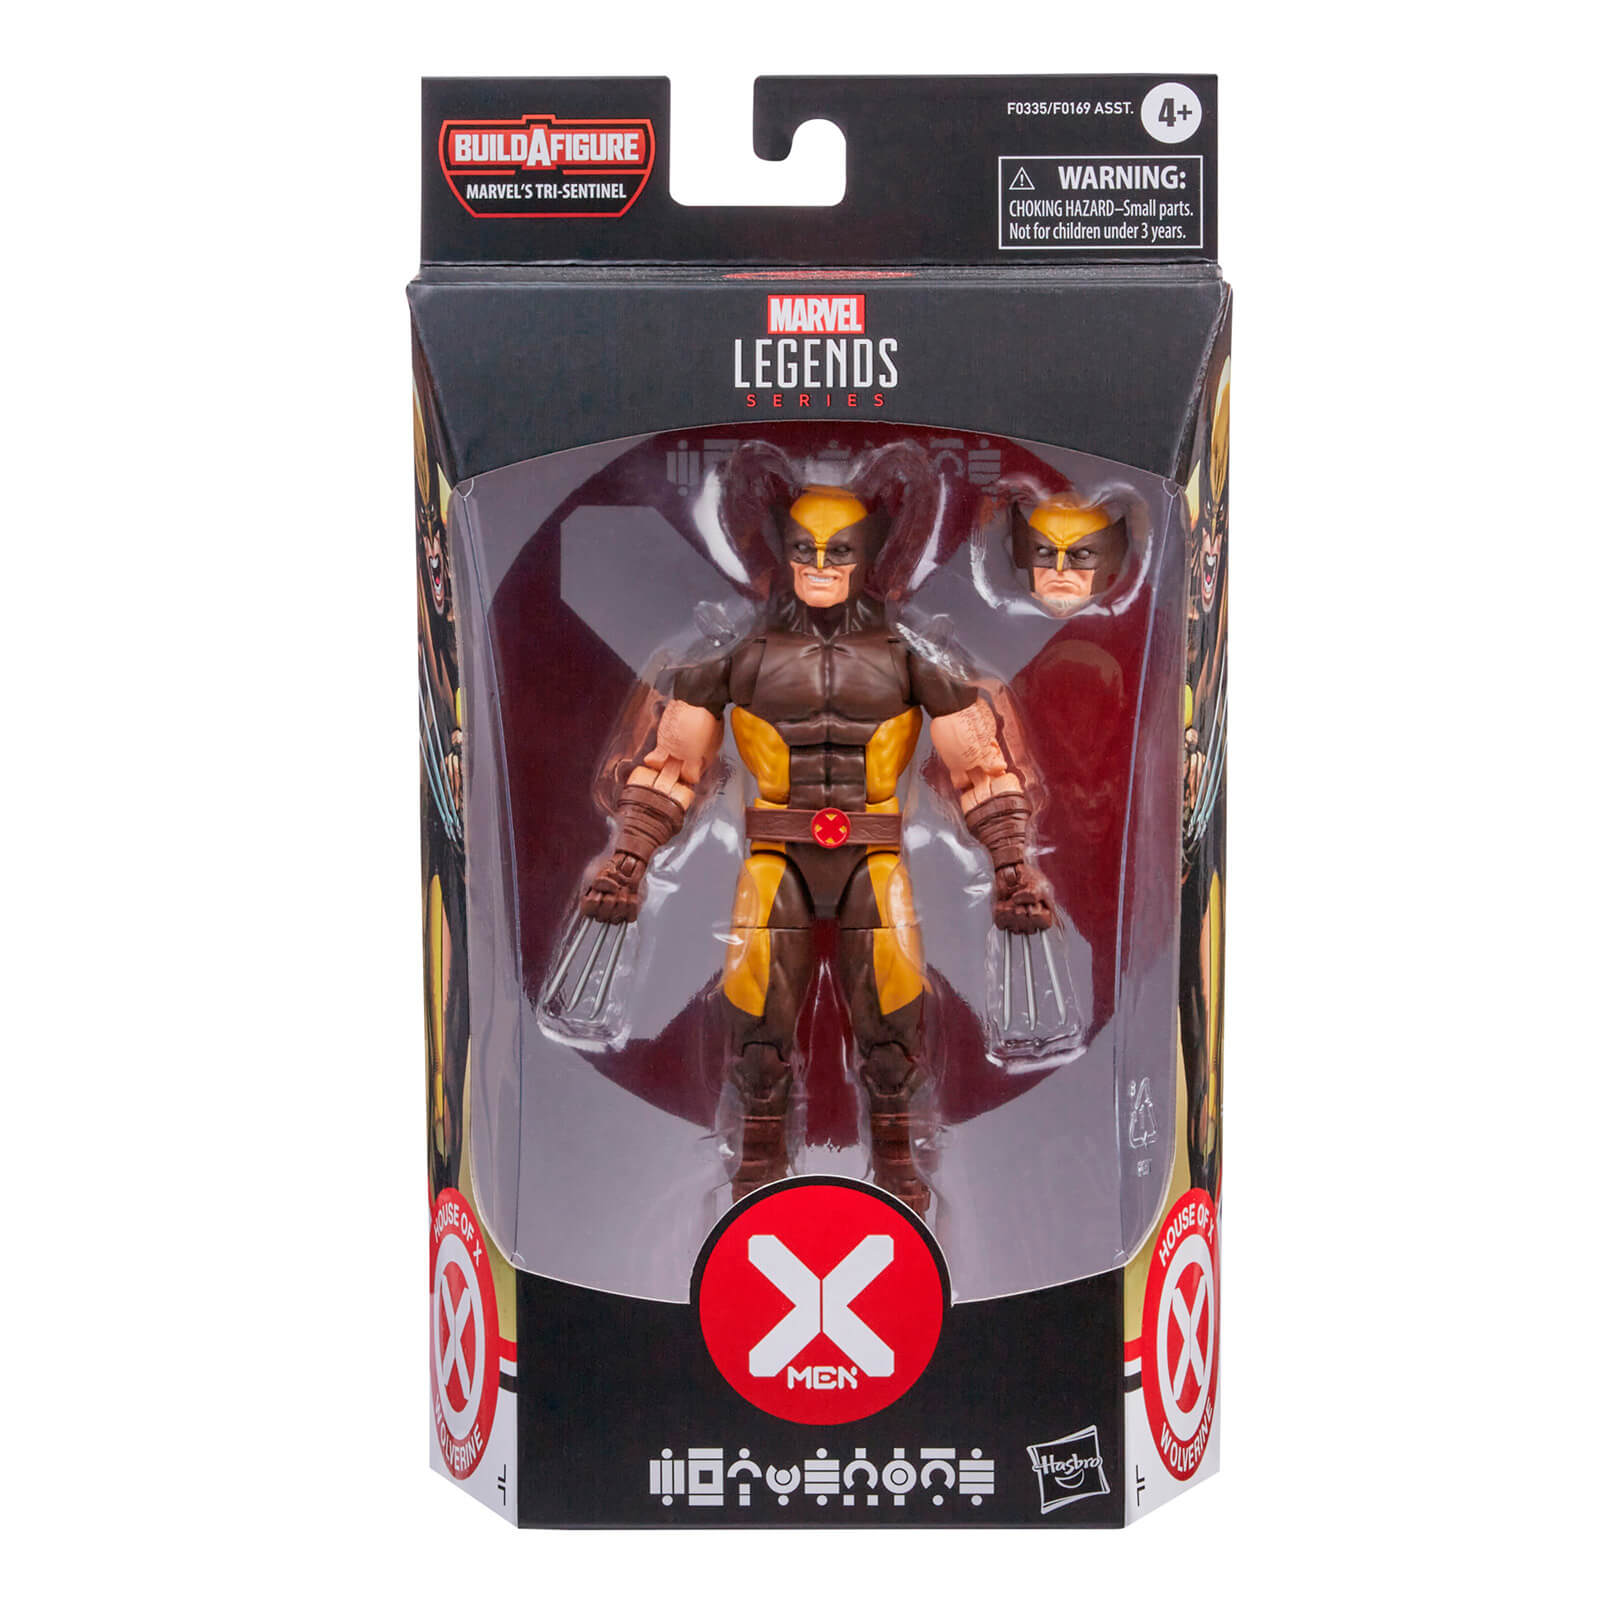 Hasbro Figurine d'action X-Men Wolverine - Hasbro Marvel Legends Series